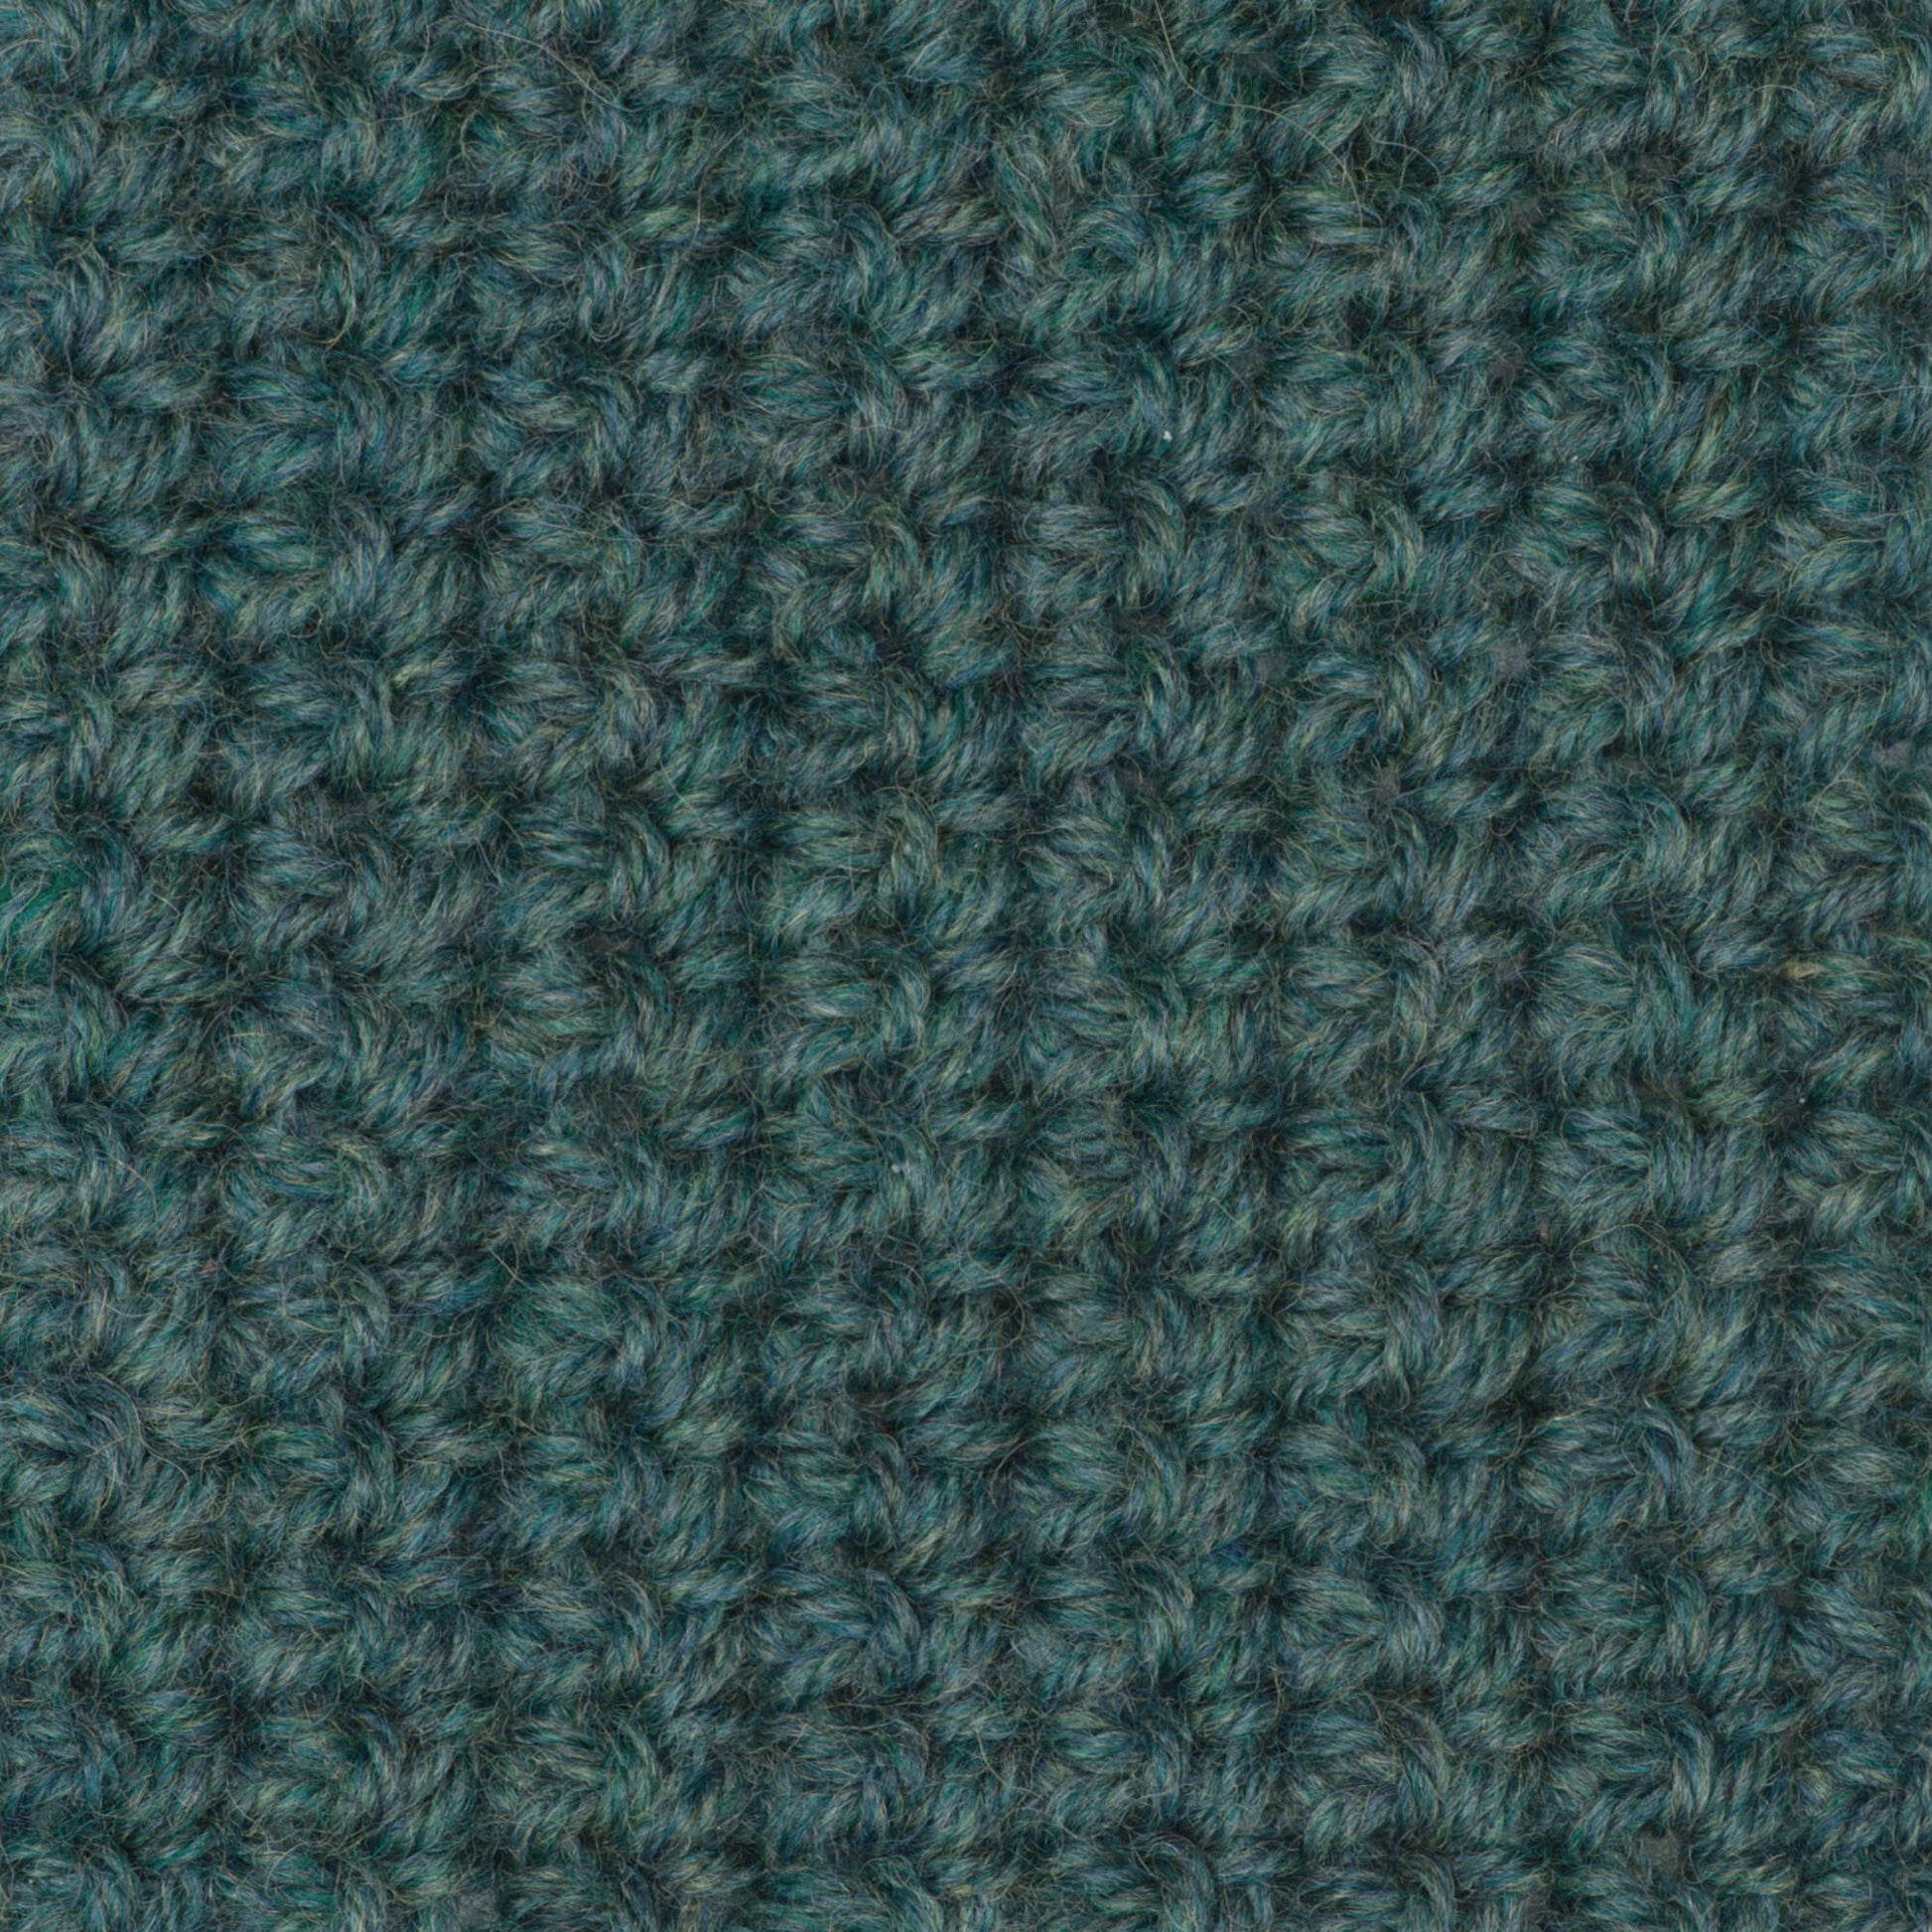 Patons Classic Wool DK Superwash Yarn - Discontinued Shades Sea Green Heather